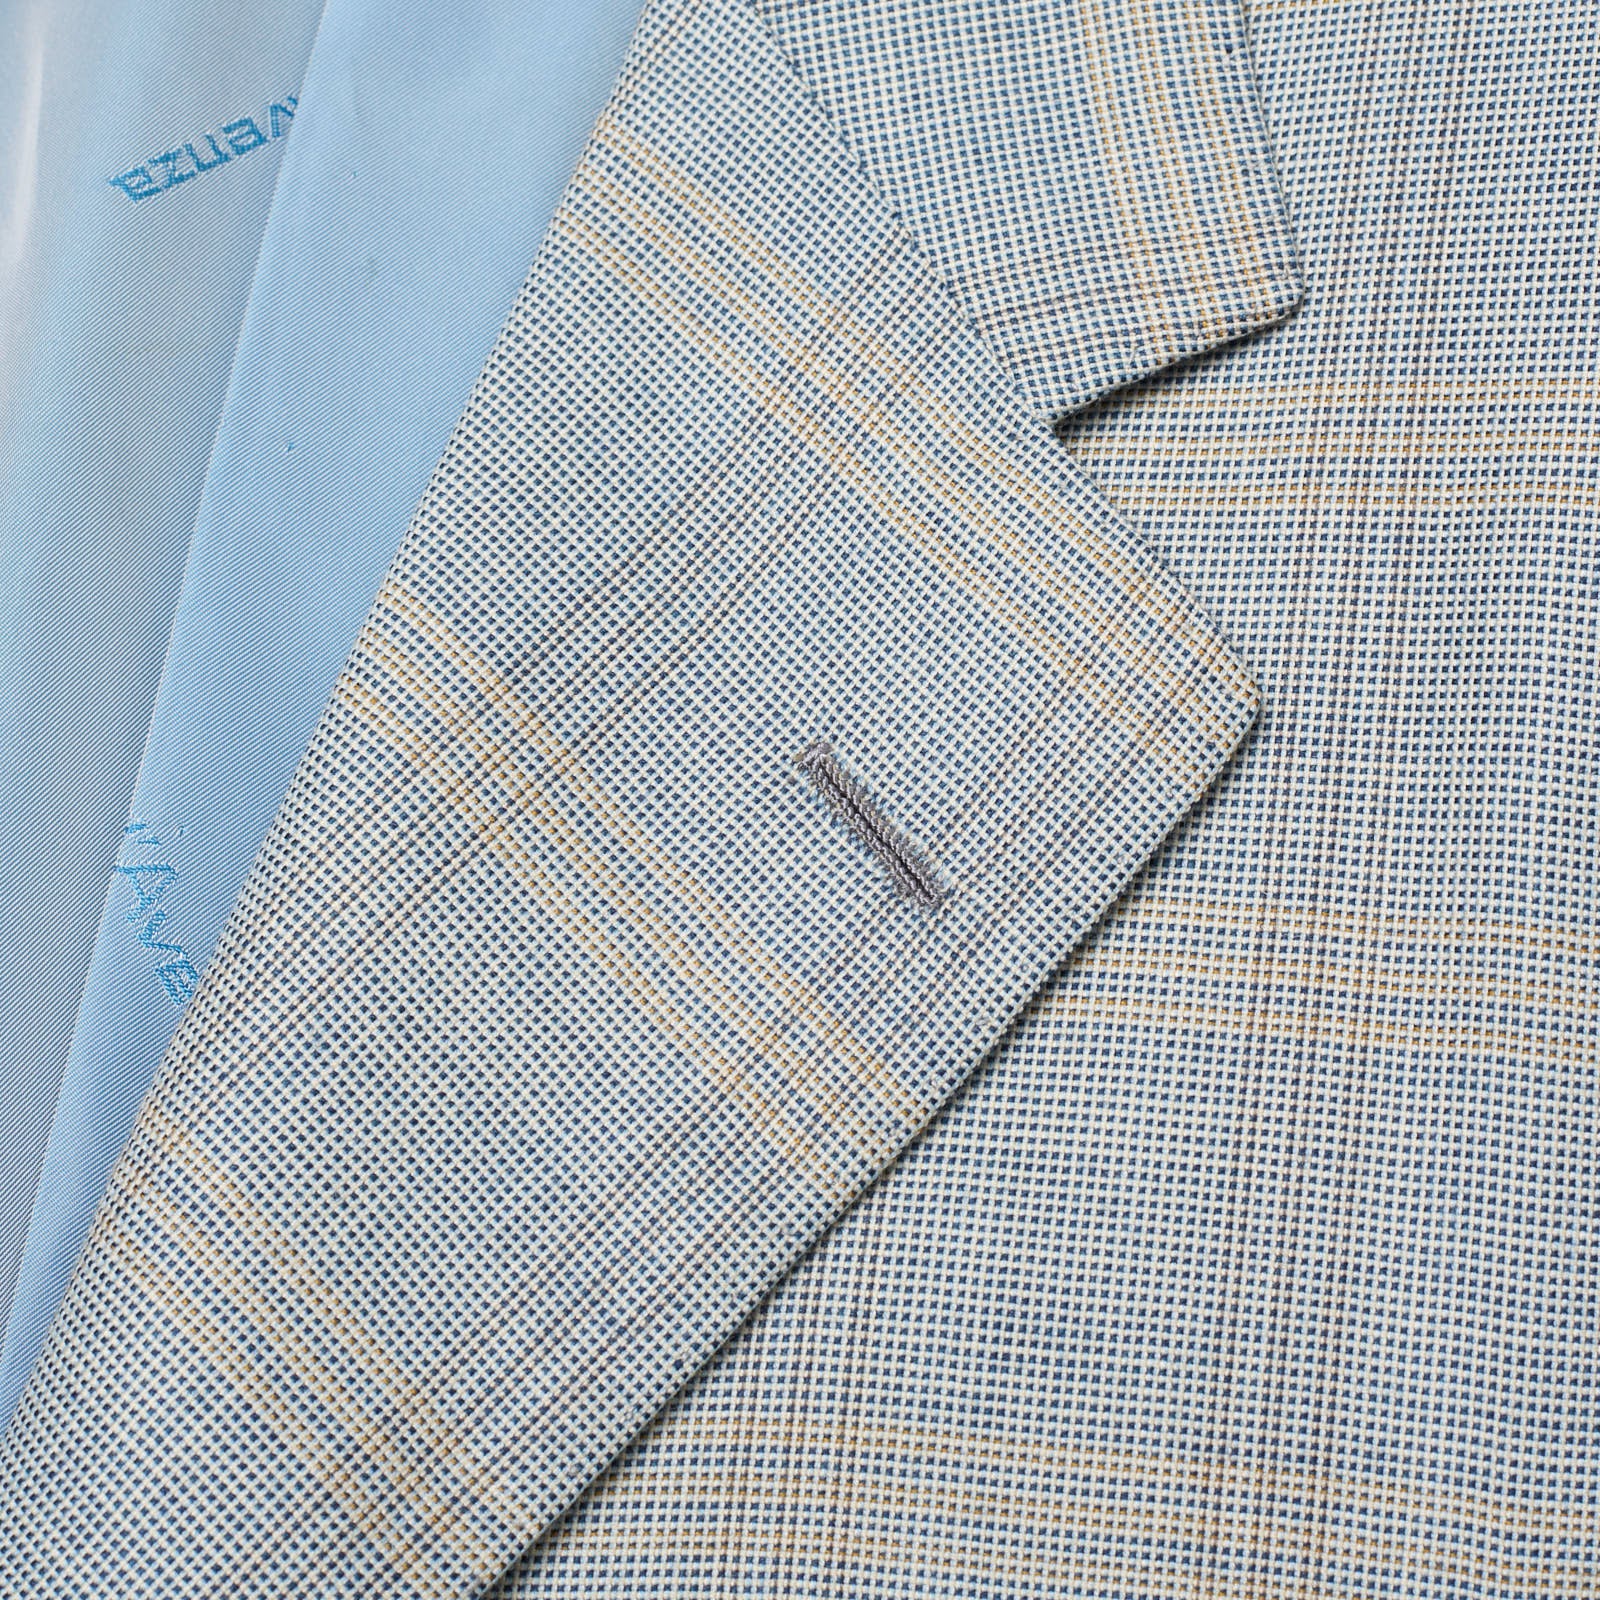 D'AVENZA for VANNUCCI Handmade Blue Plaid Pure Cashmere Jacket EU 48 NEW US 38